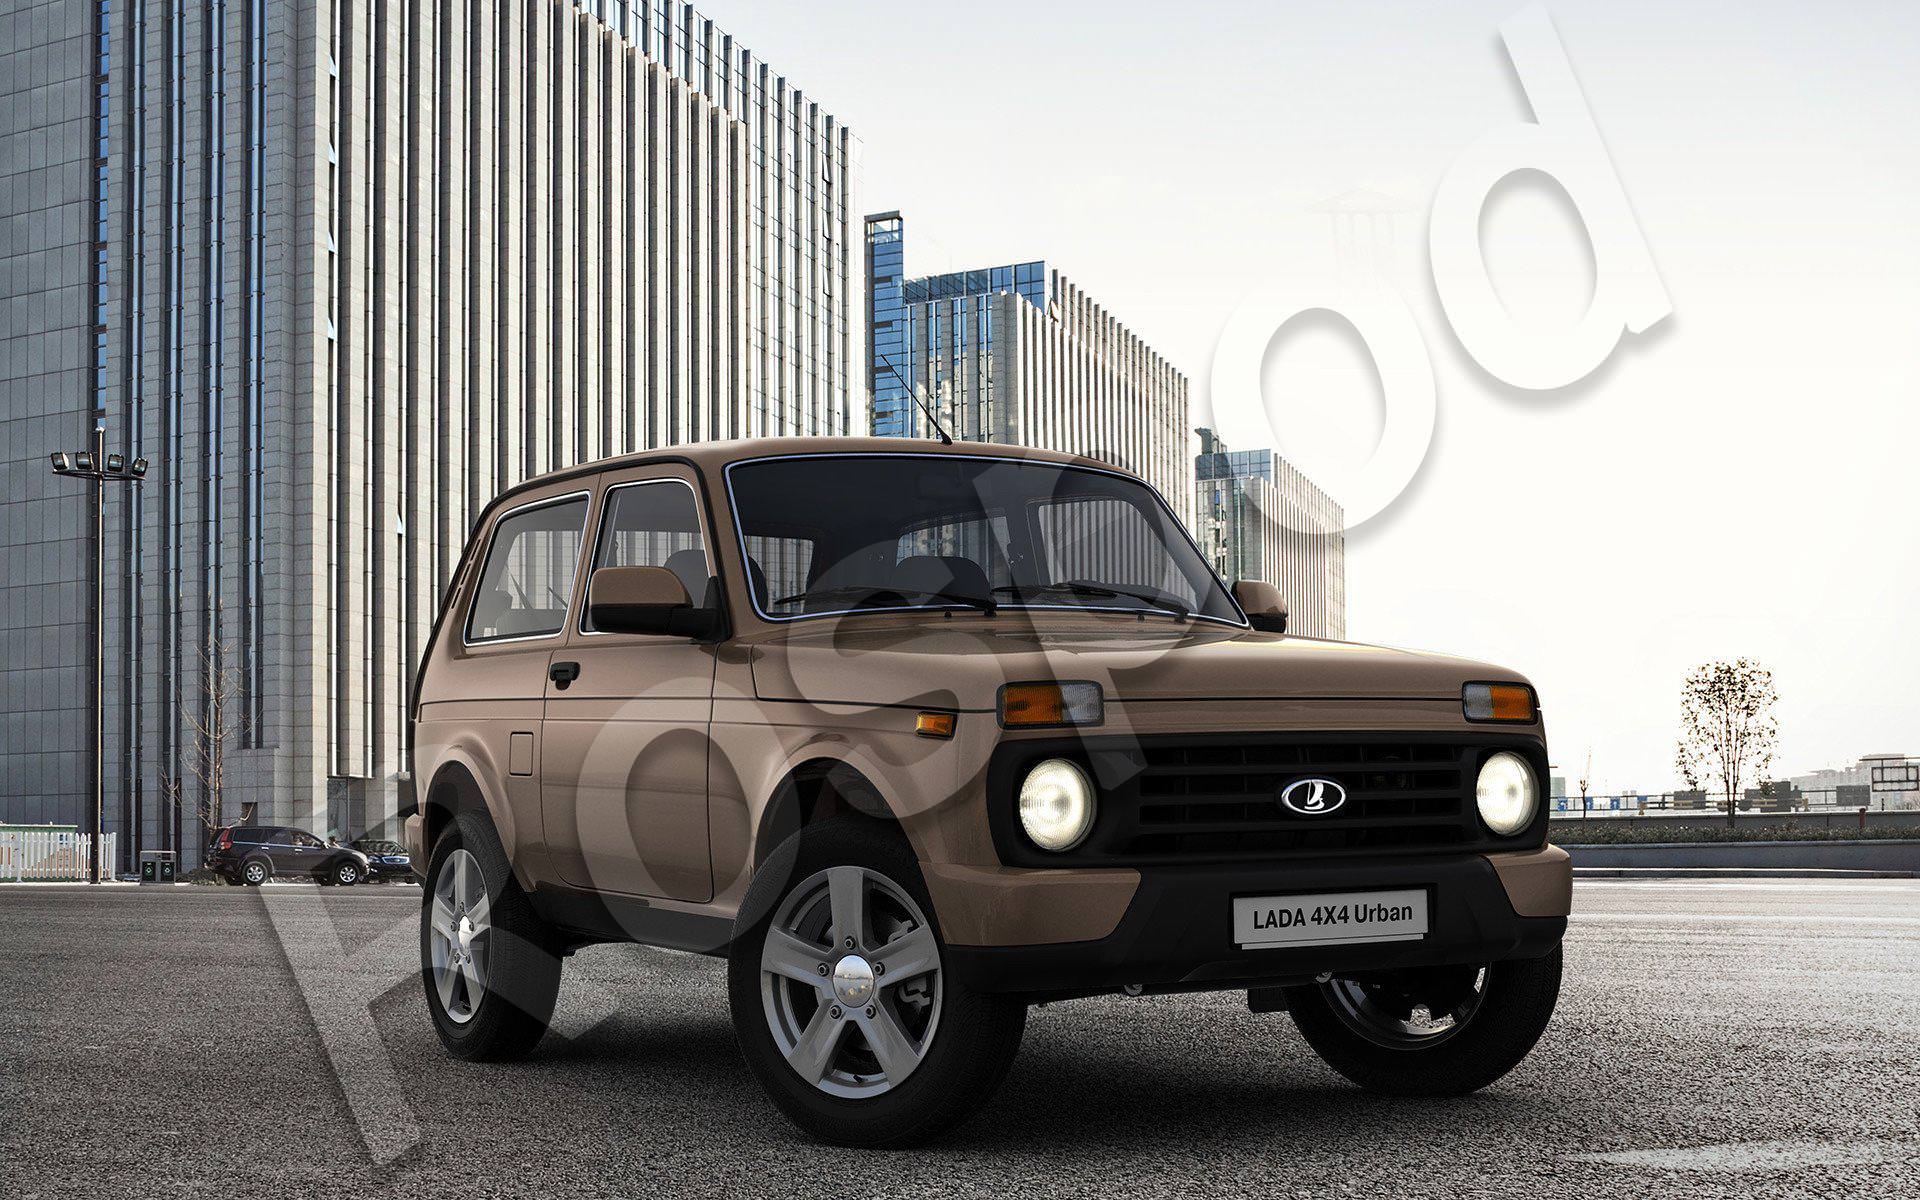 lada-4x4-urban-lada-niva-vaz-urban-components-vehicles-suv-crossover-metropolis-bestseller